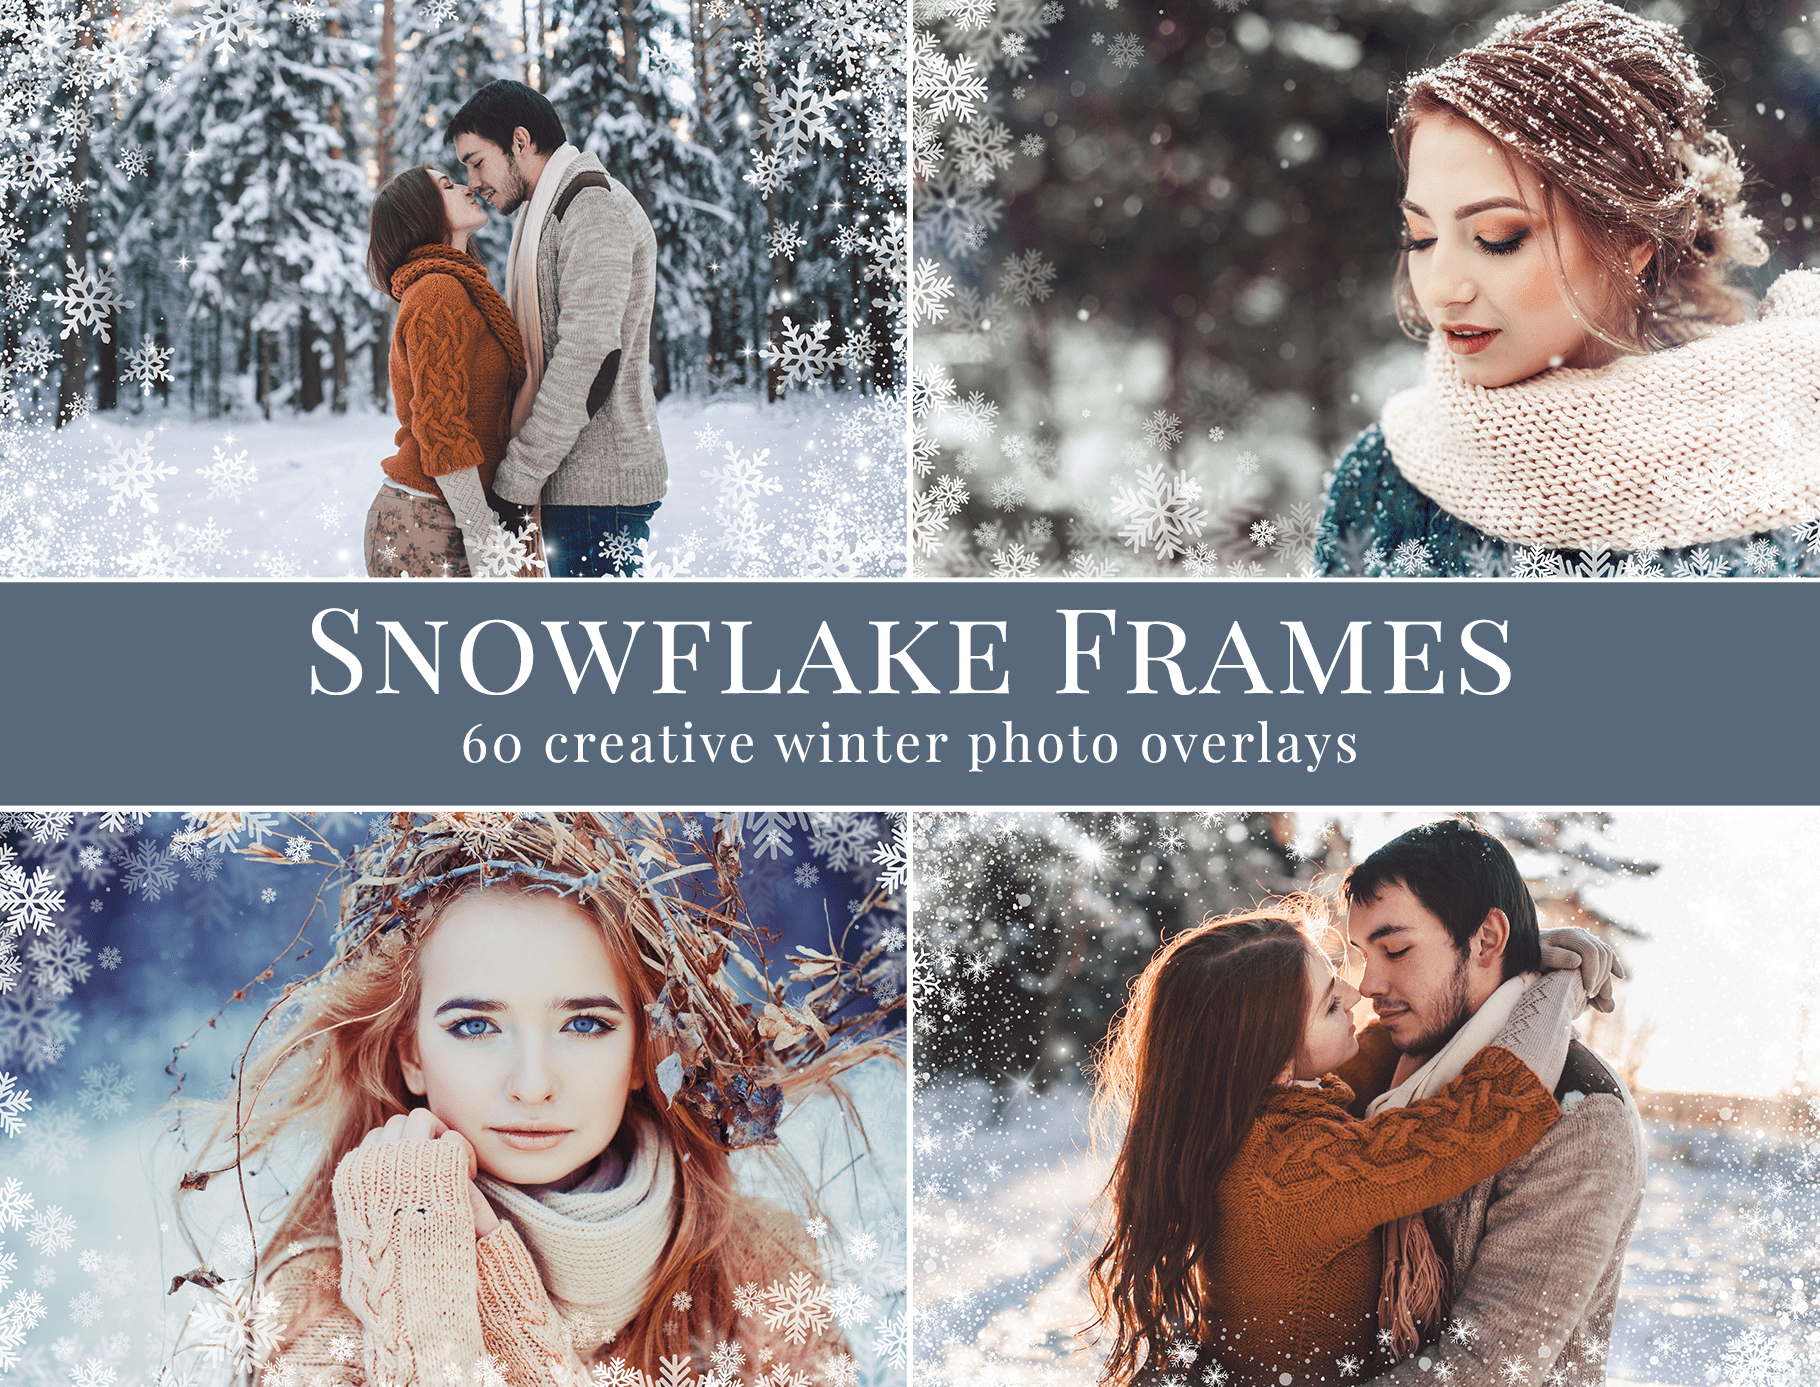 Snowflake Frames photo overlays